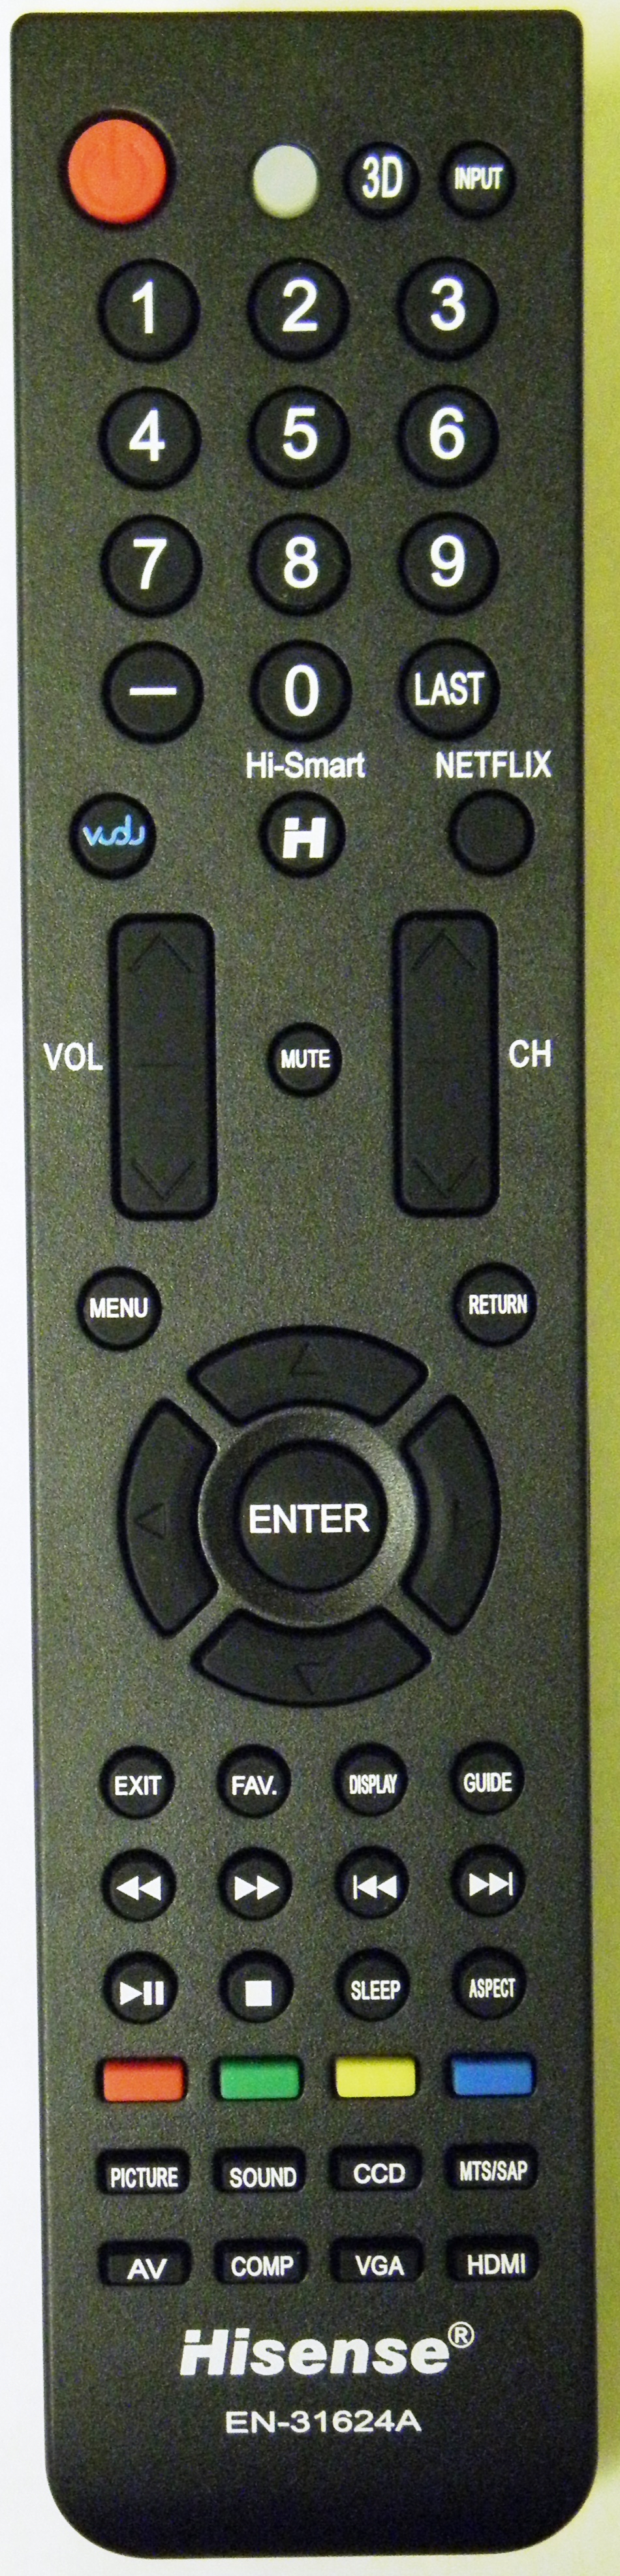 HISENSE EN-31624A TV Remote Control